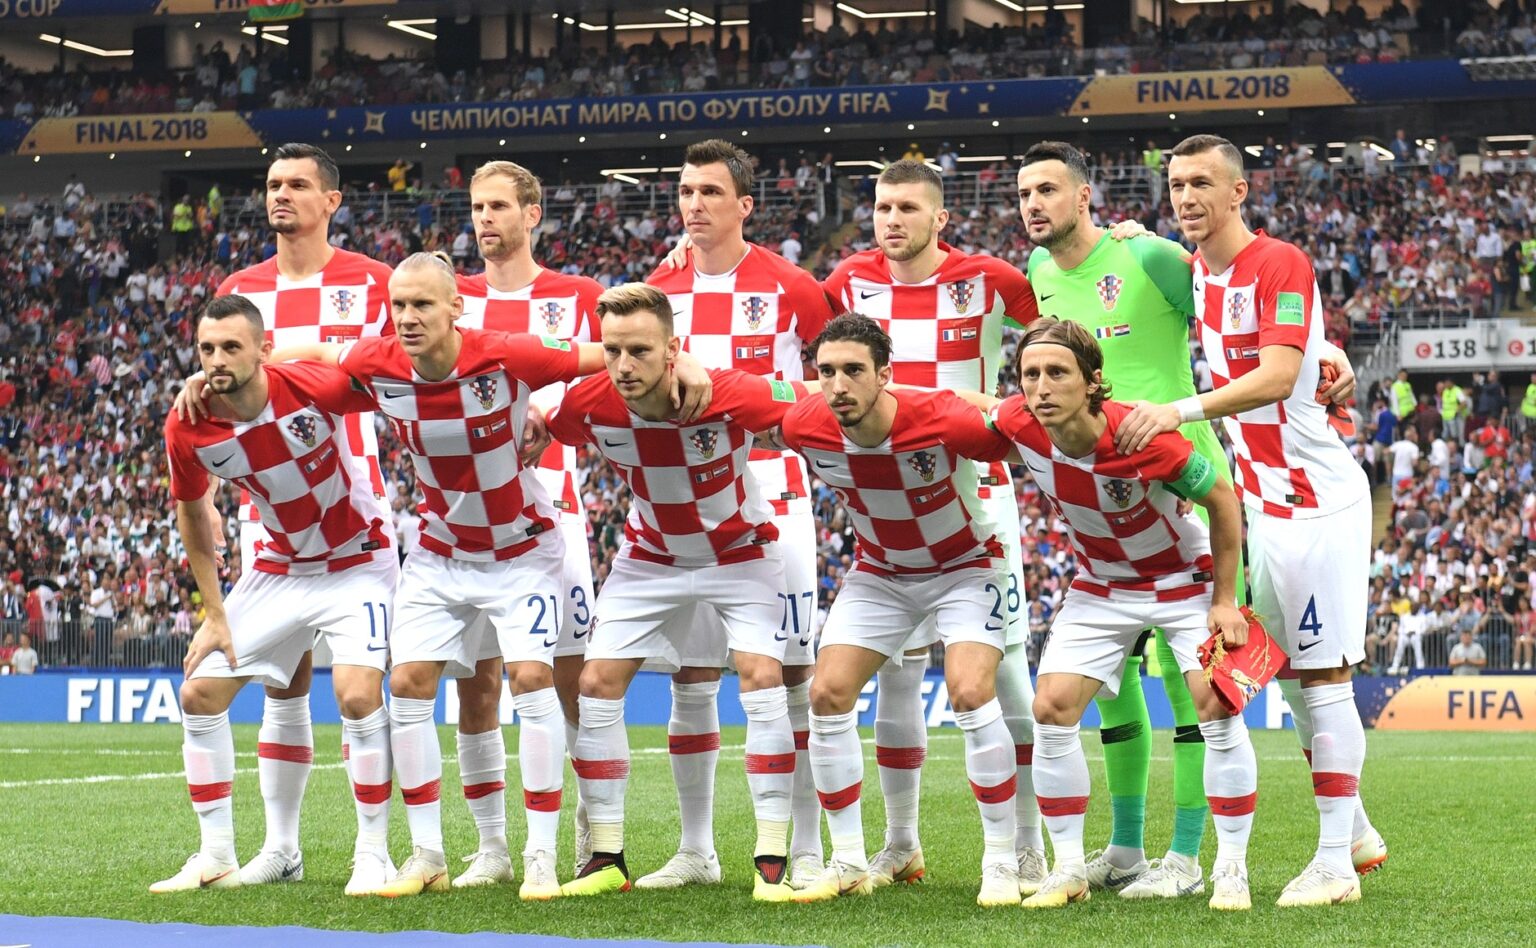 All About Football in Croatia - Travel Croatia